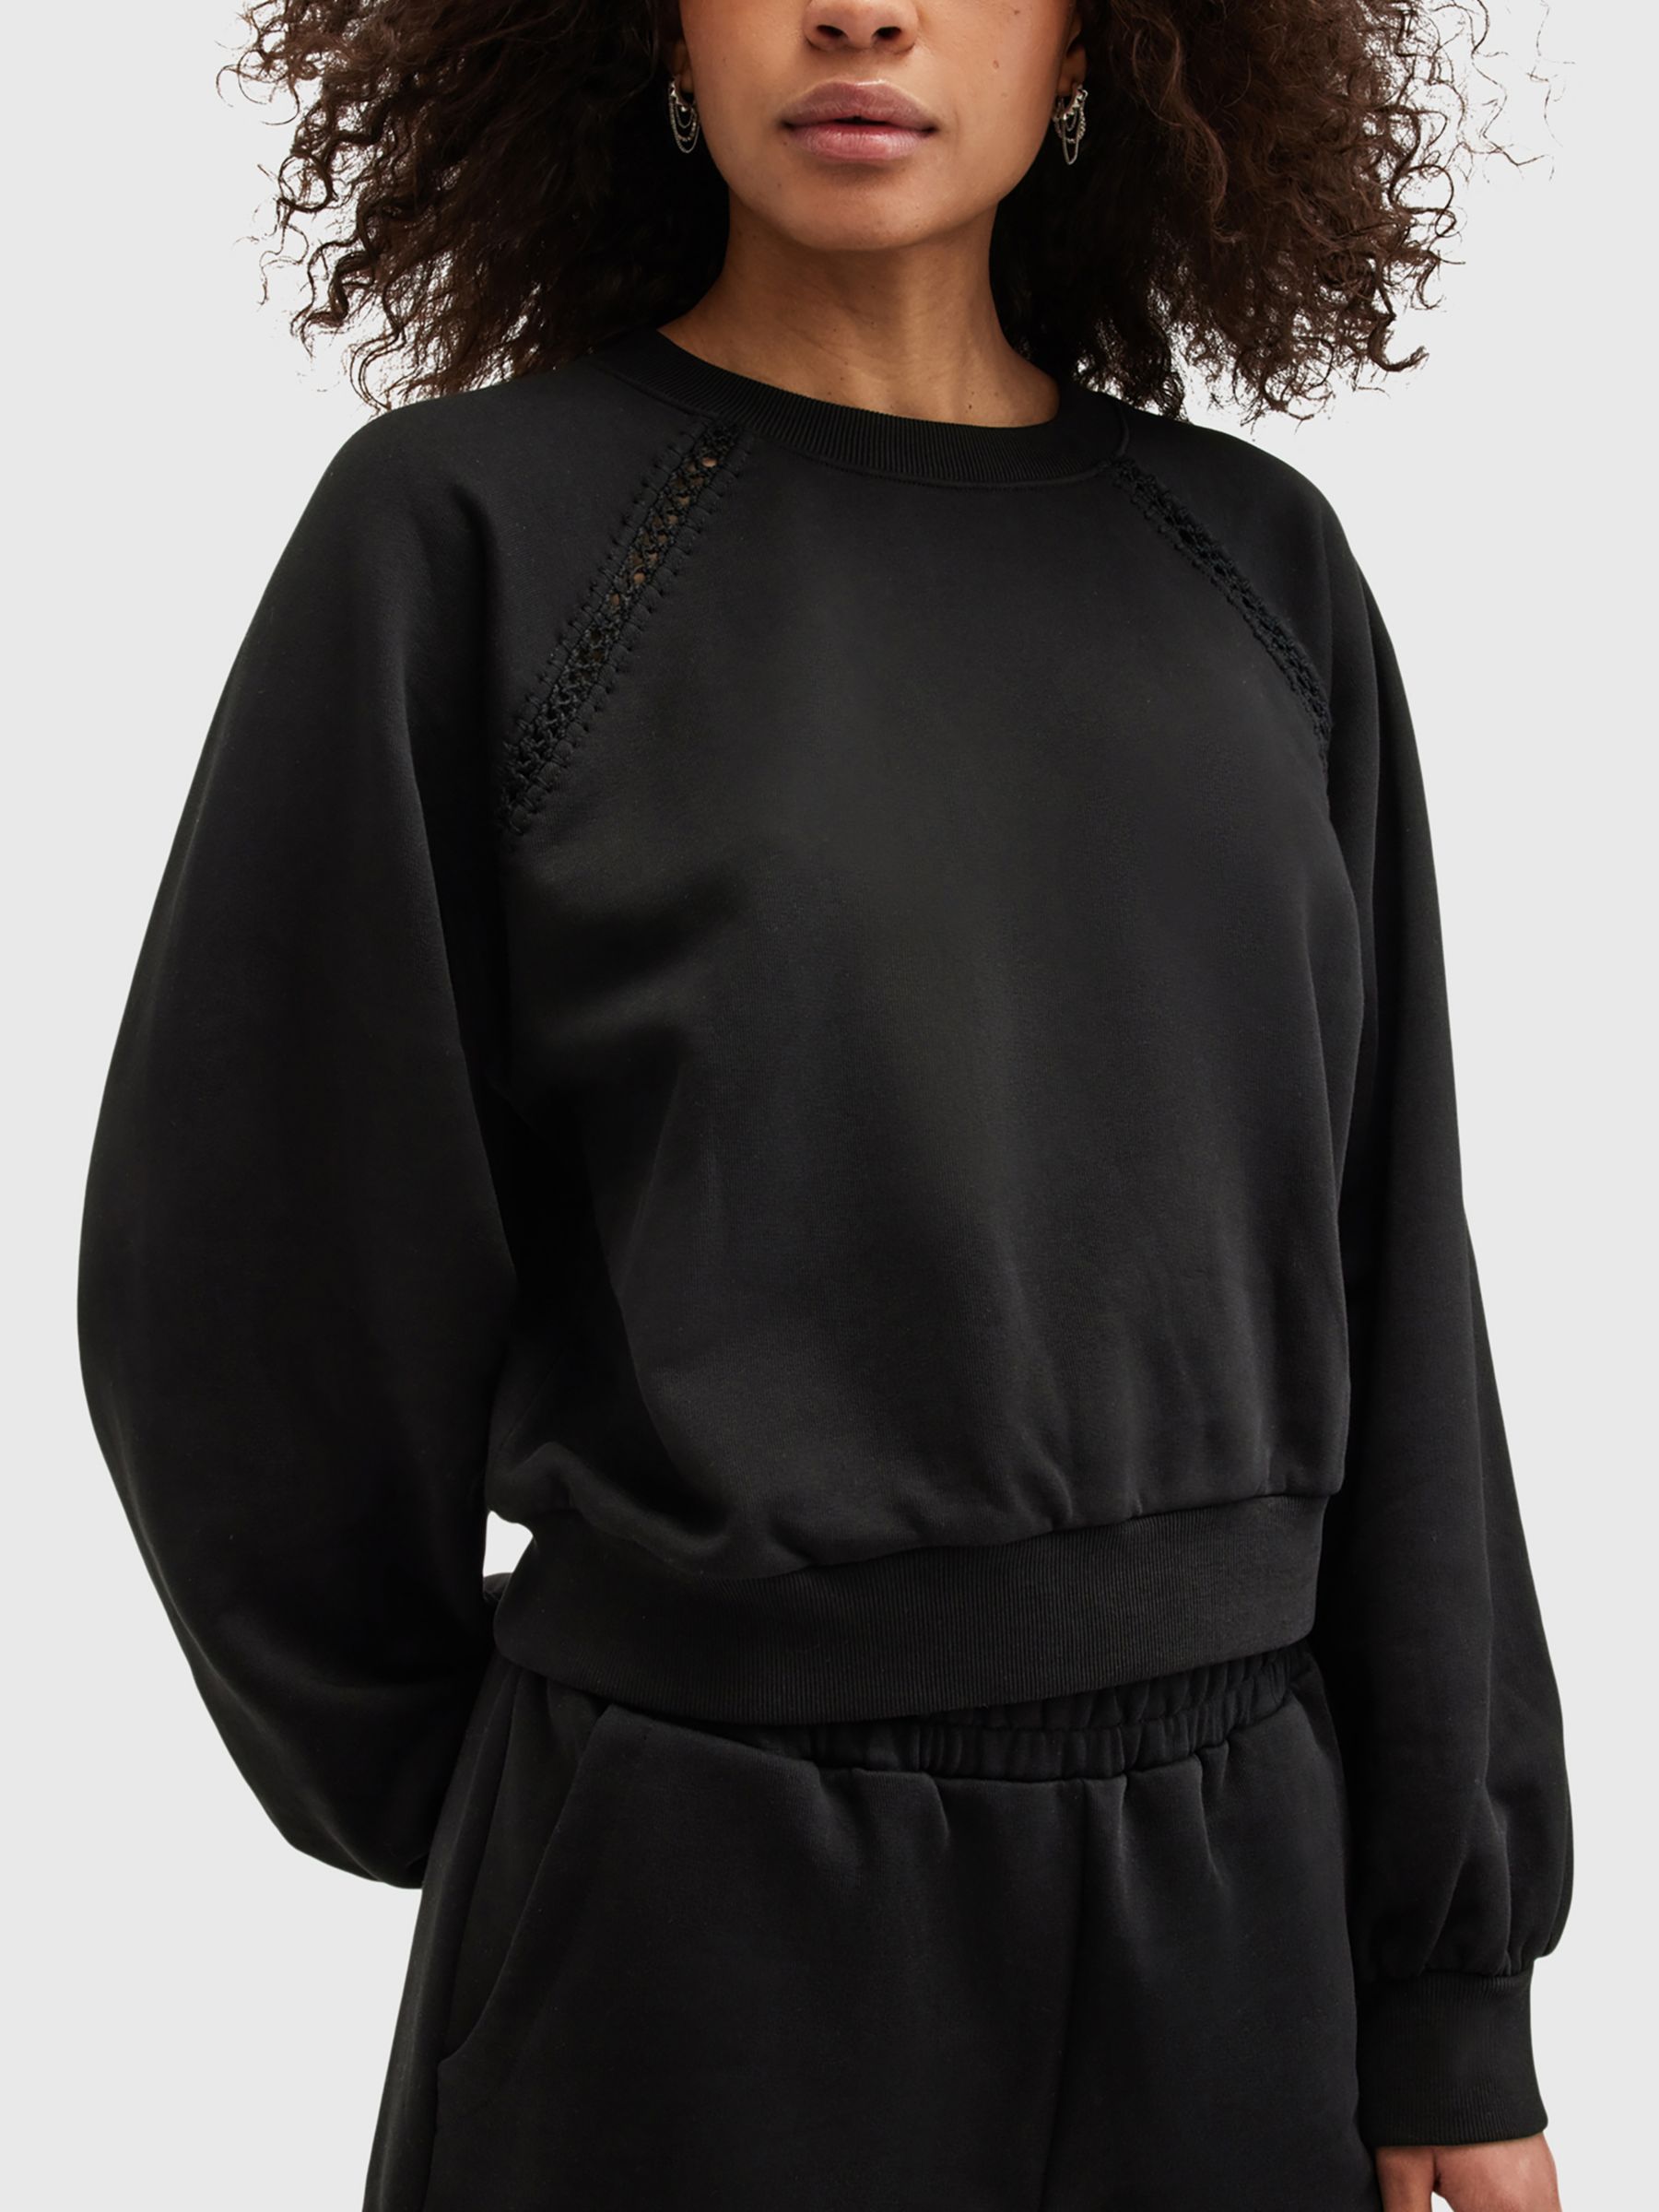 AllSaints Ewelina Sweatshirt, Black, L